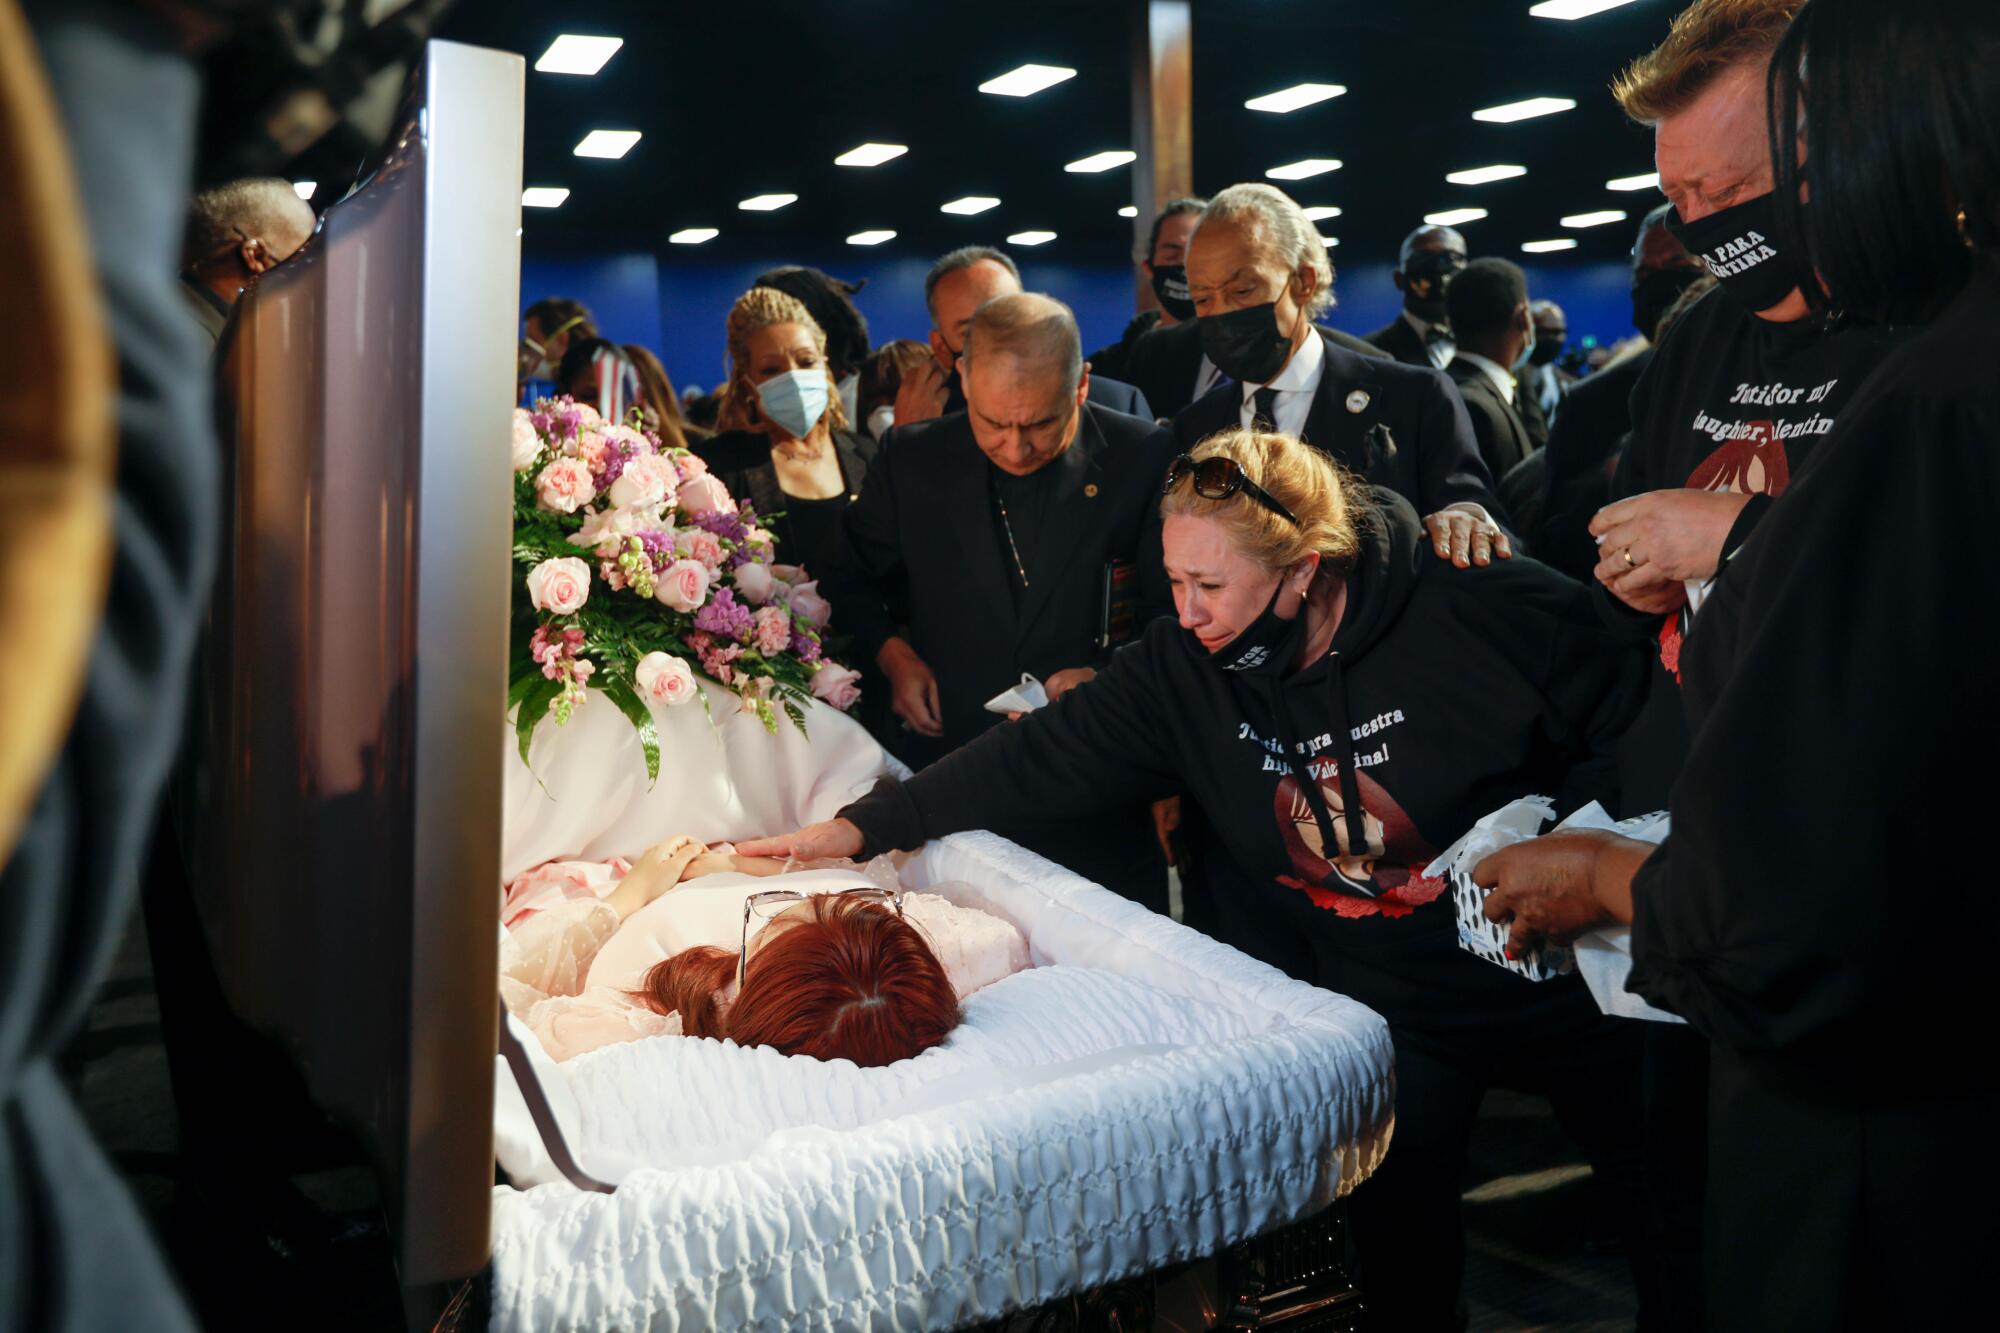 People gather around an open casket